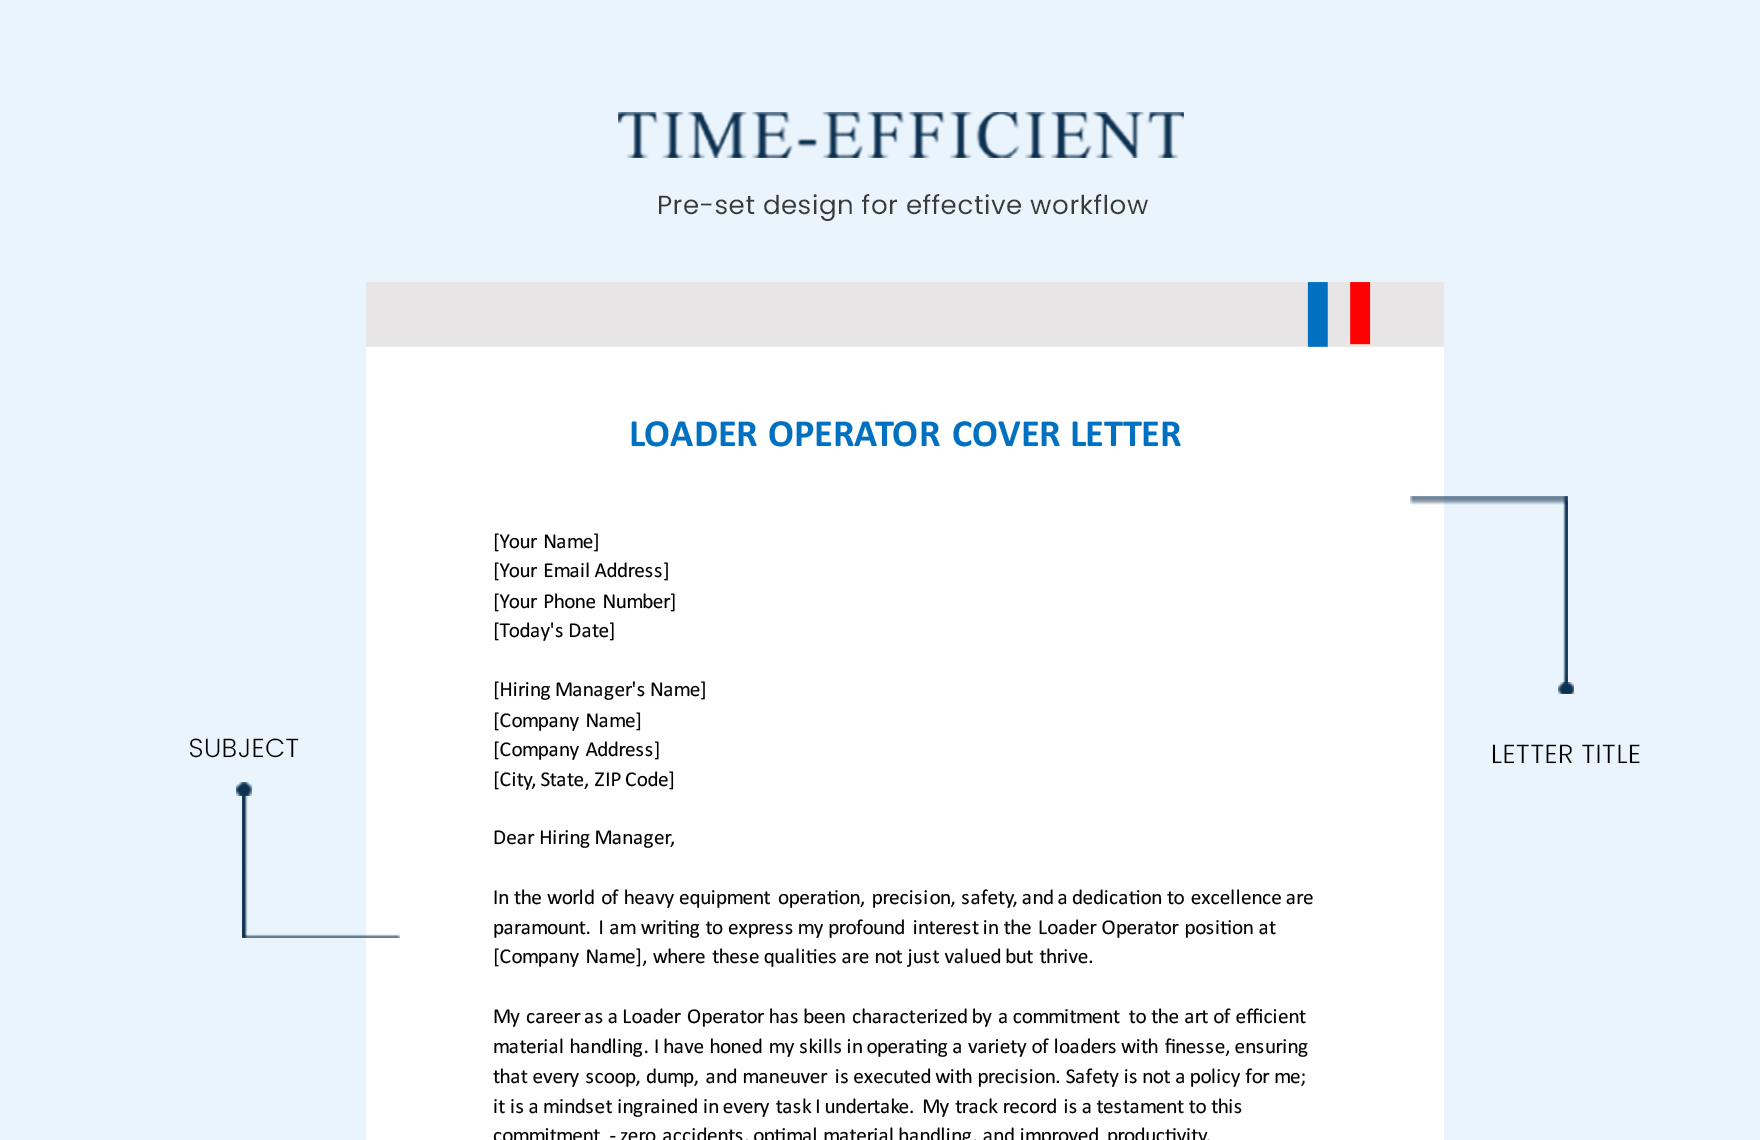 Loader Operator Cover Letter